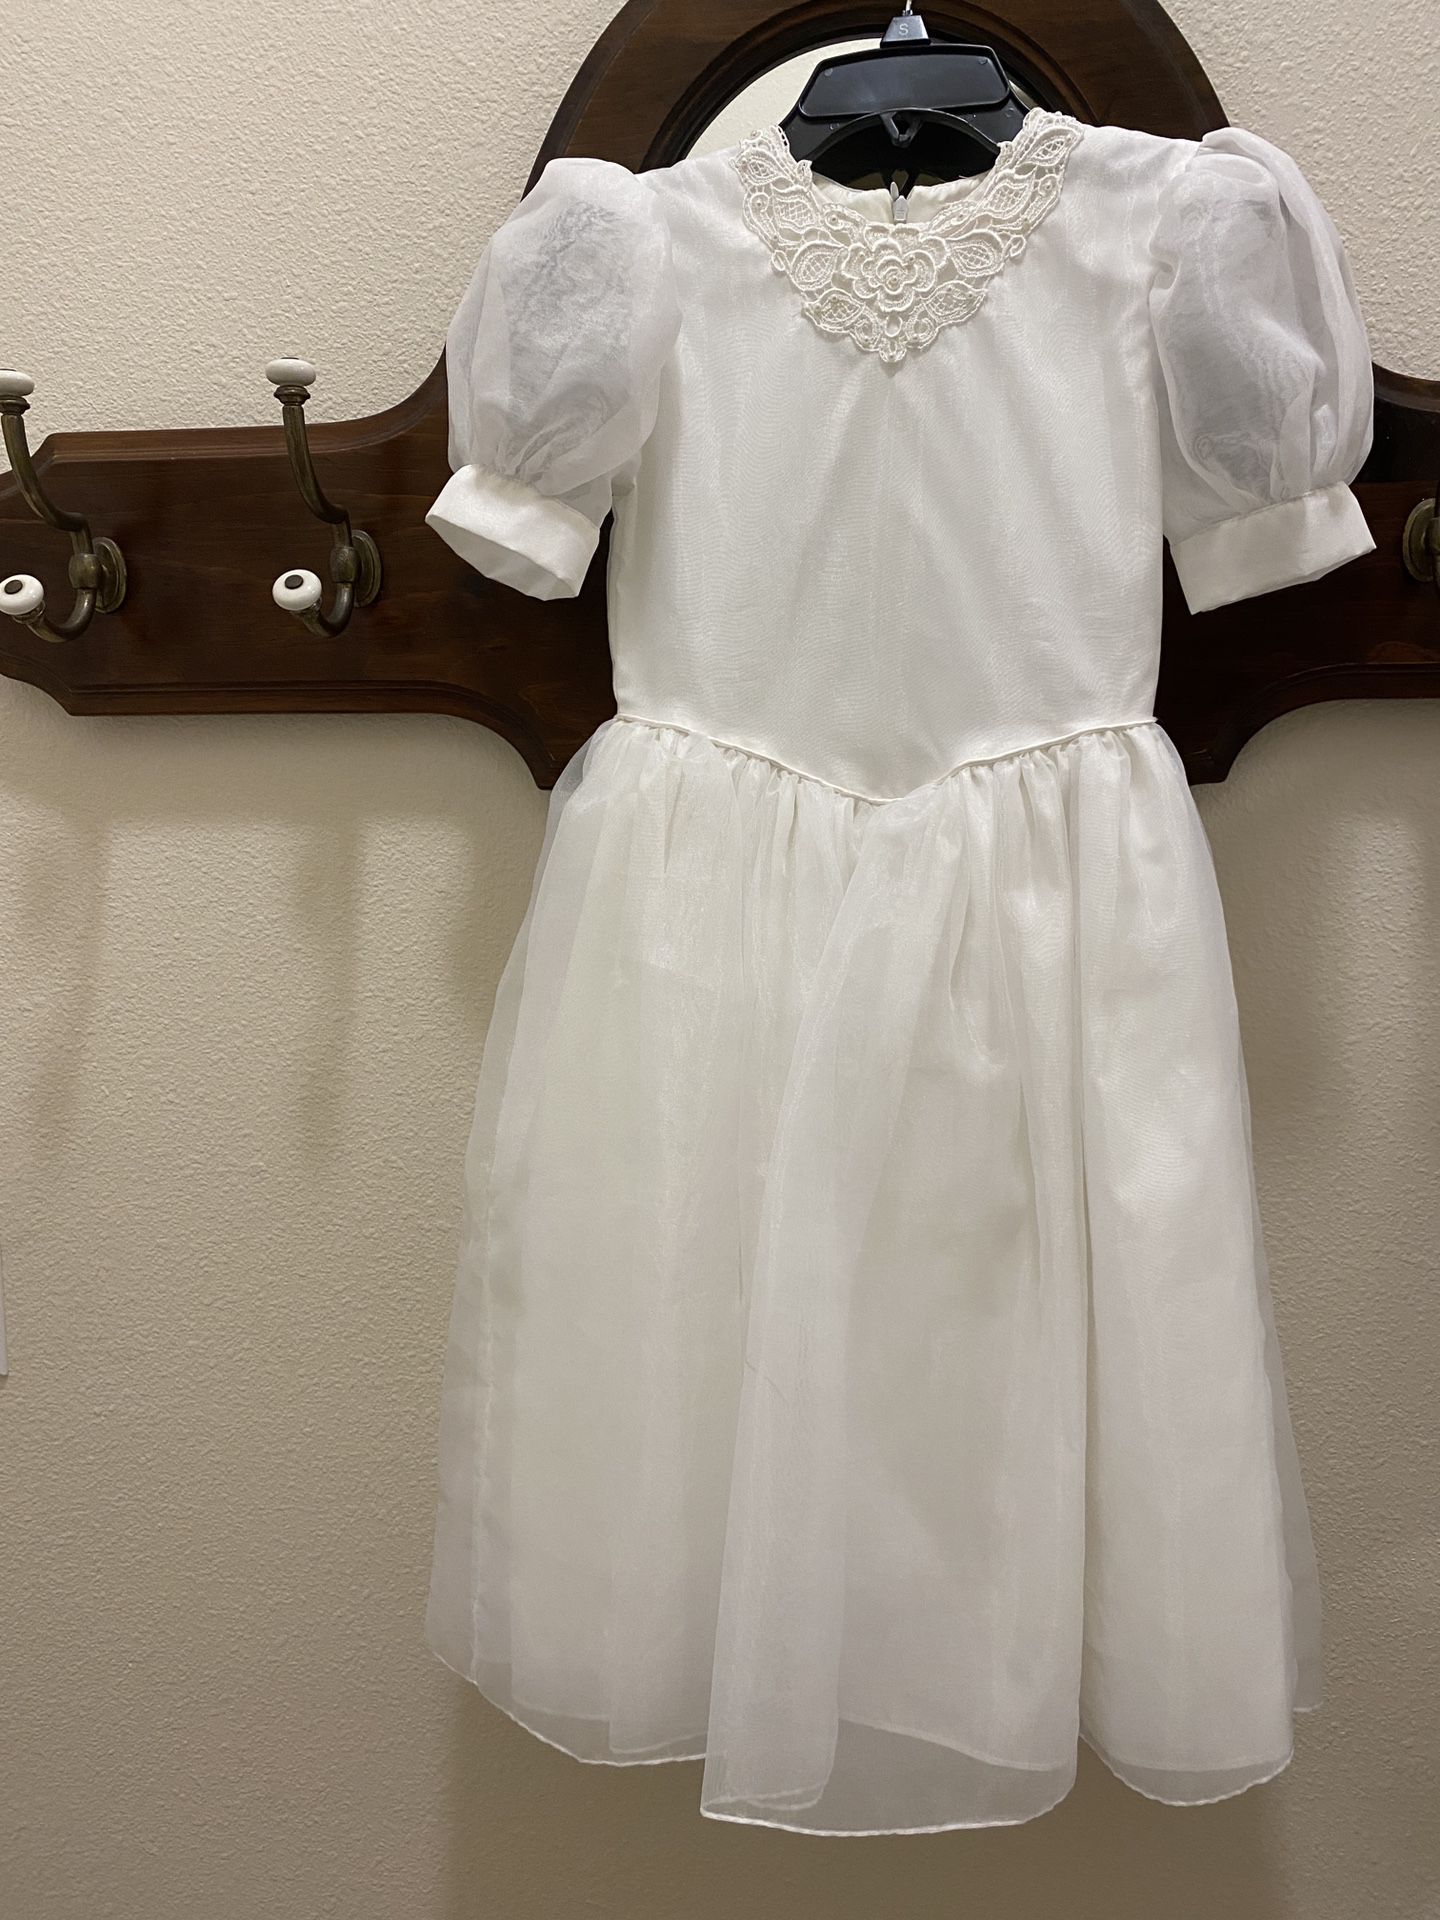 Flower Girl Dress/ Communion Dress